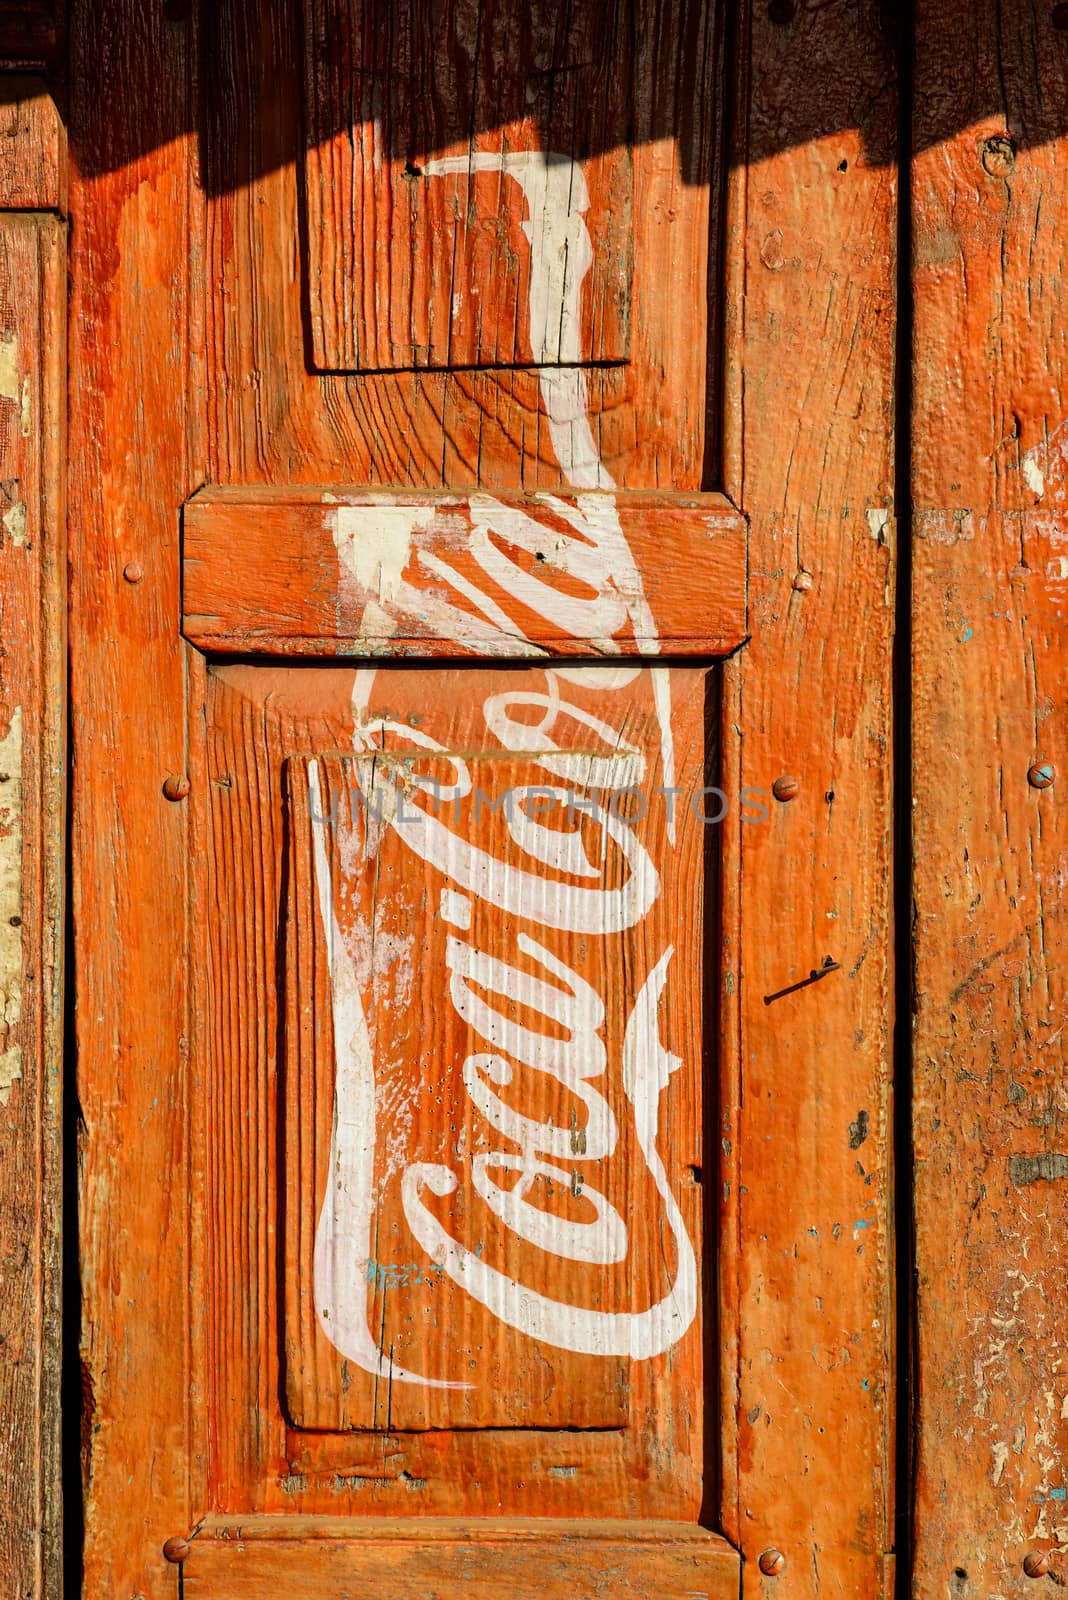 KATHMANDU, NEPAL - CIRCA JANUARY 2014: Vintage Coca-Cola adverisement painted on a red wooden door.